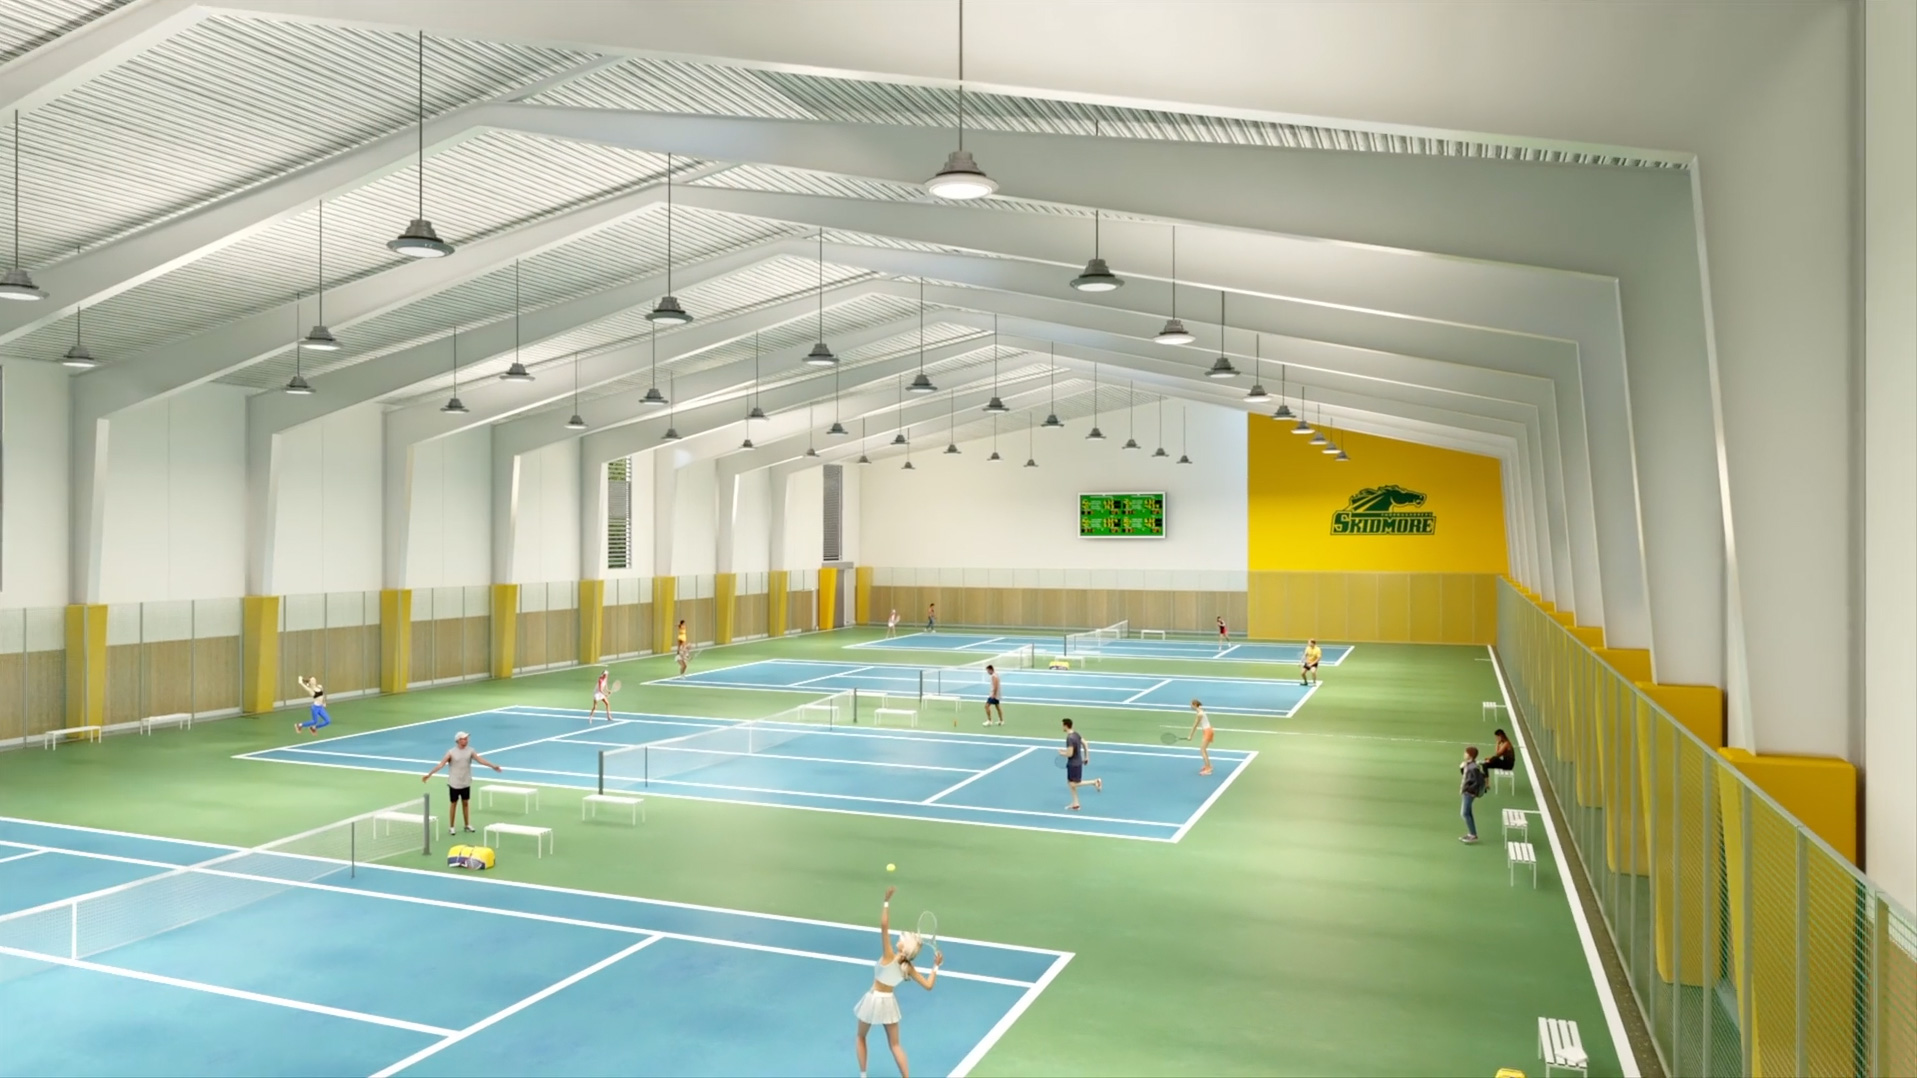 Indoor tennis facility